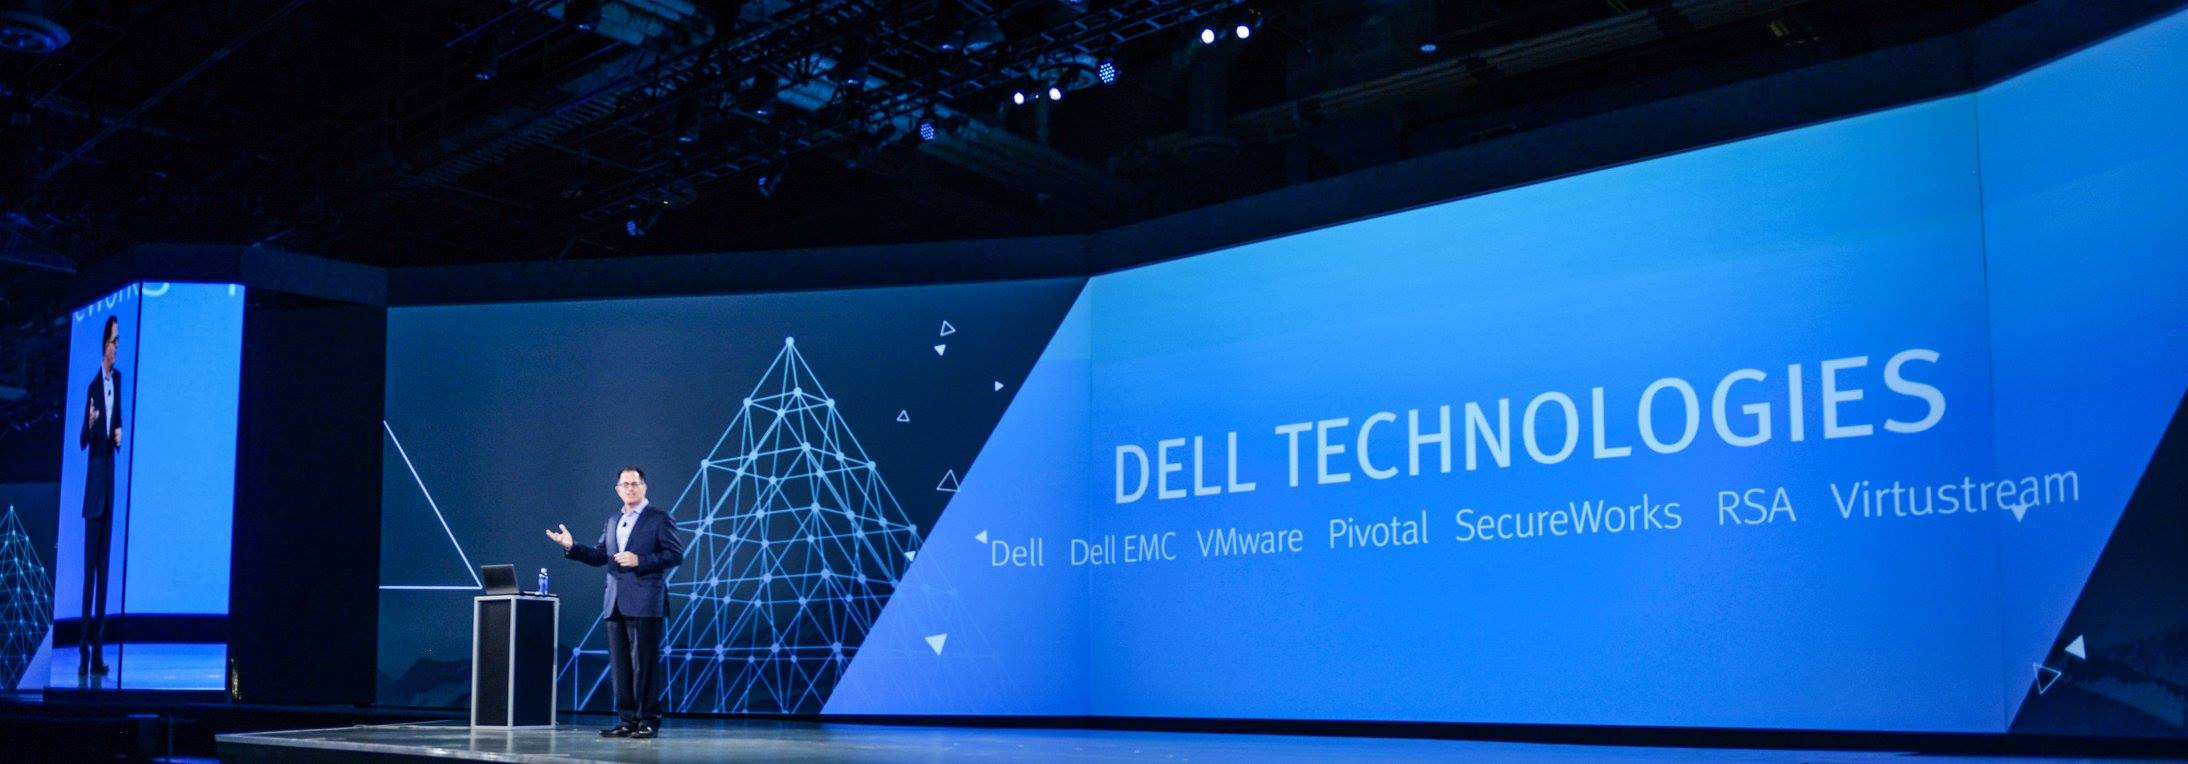 Dell Technologies опубликовала отчет за третий квартал 2020 года